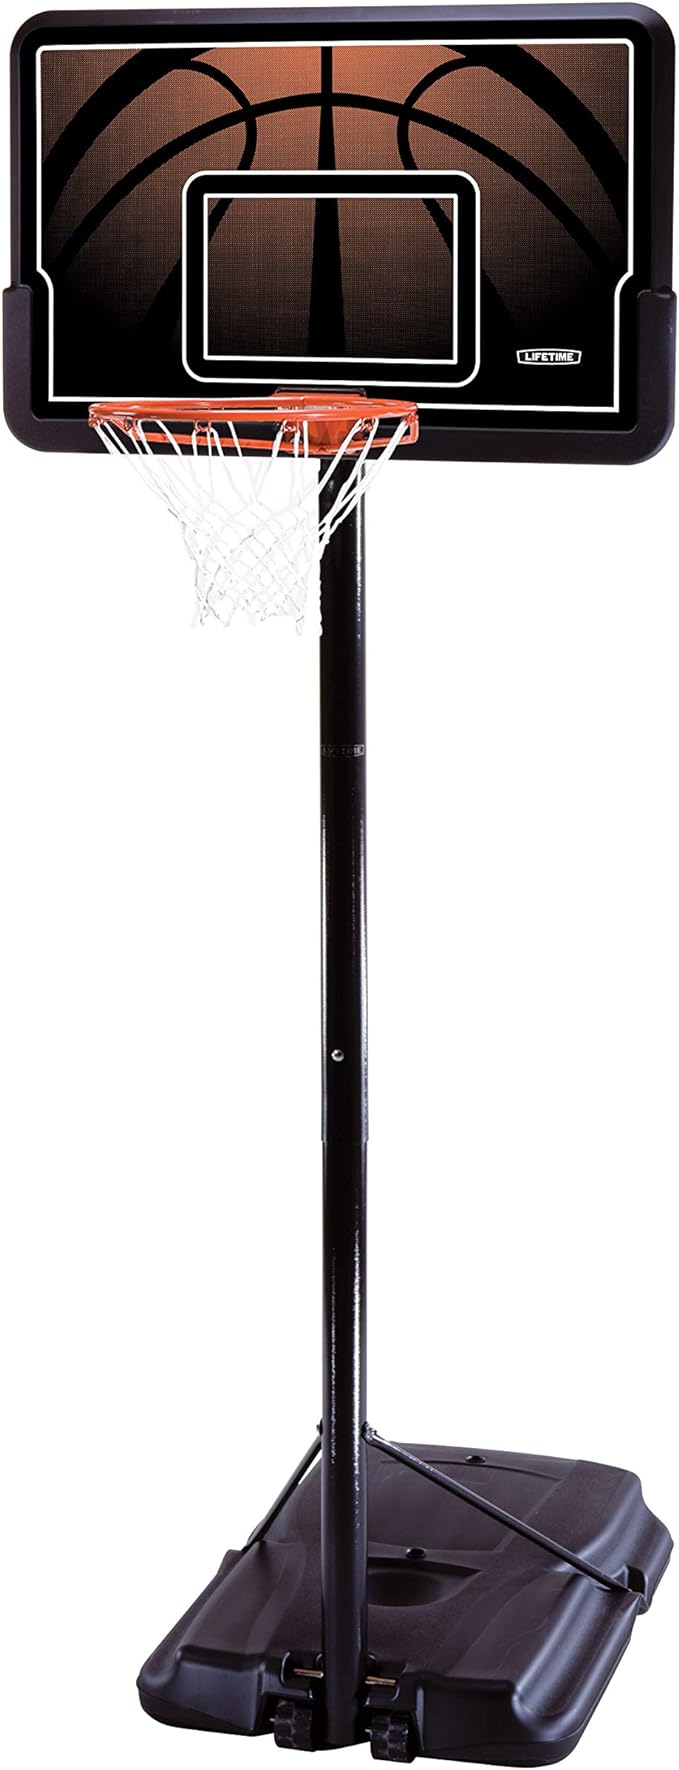 lifetime height adjustable portable basketball system 44 inch backboard  ‎lifetime b003twvil6